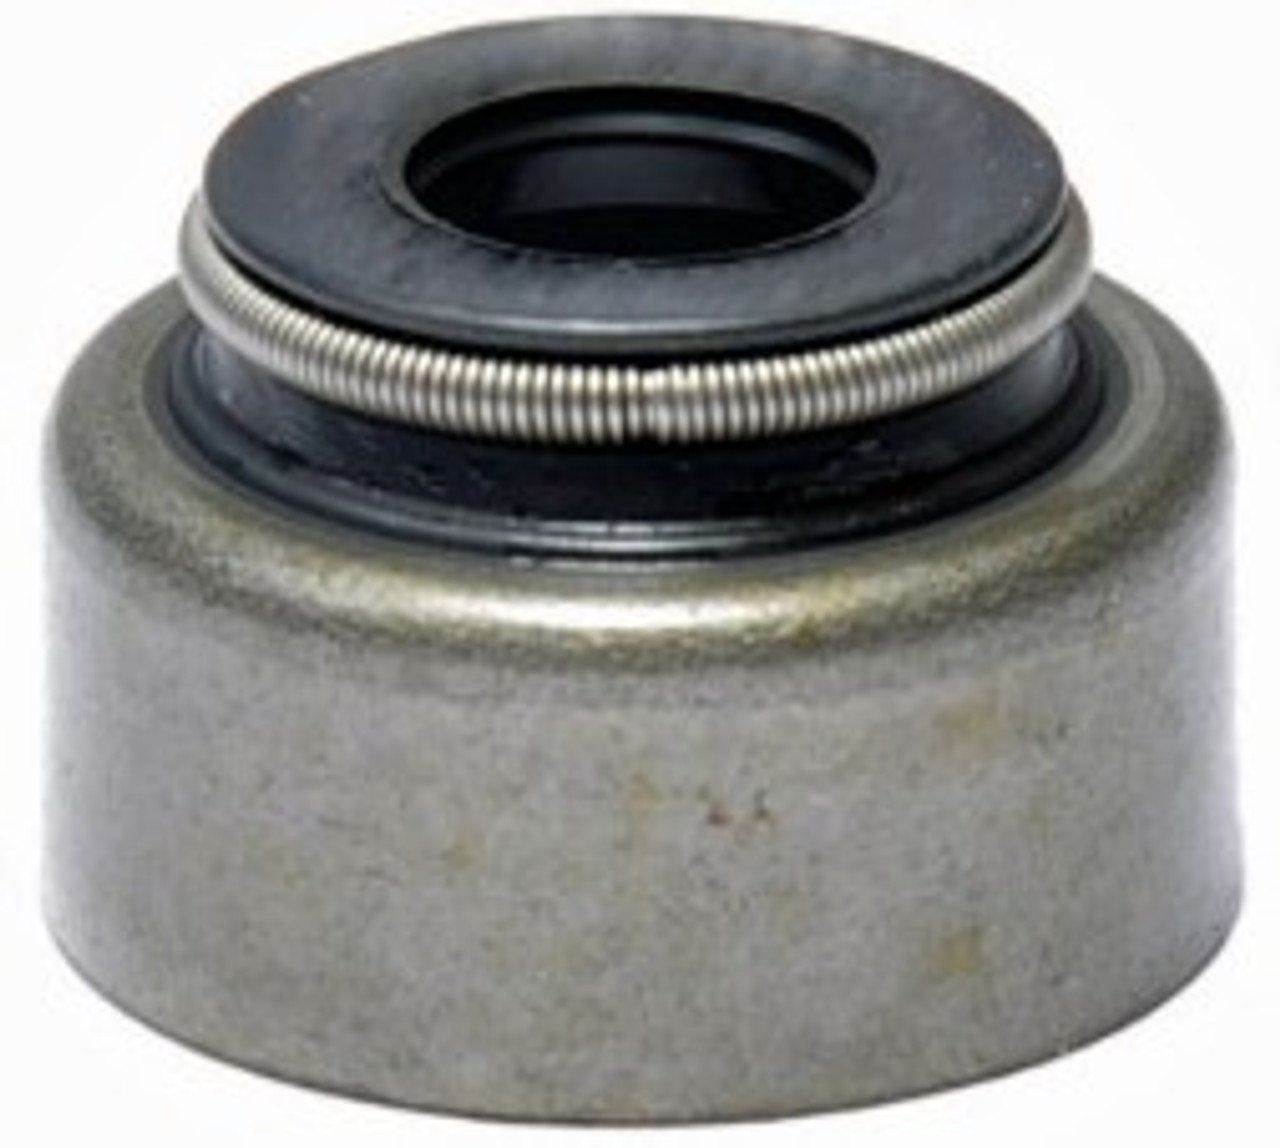 Valve Stem Oil Seal - 1999 Isuzu Amigo 3.2L (S475V-25.K101)